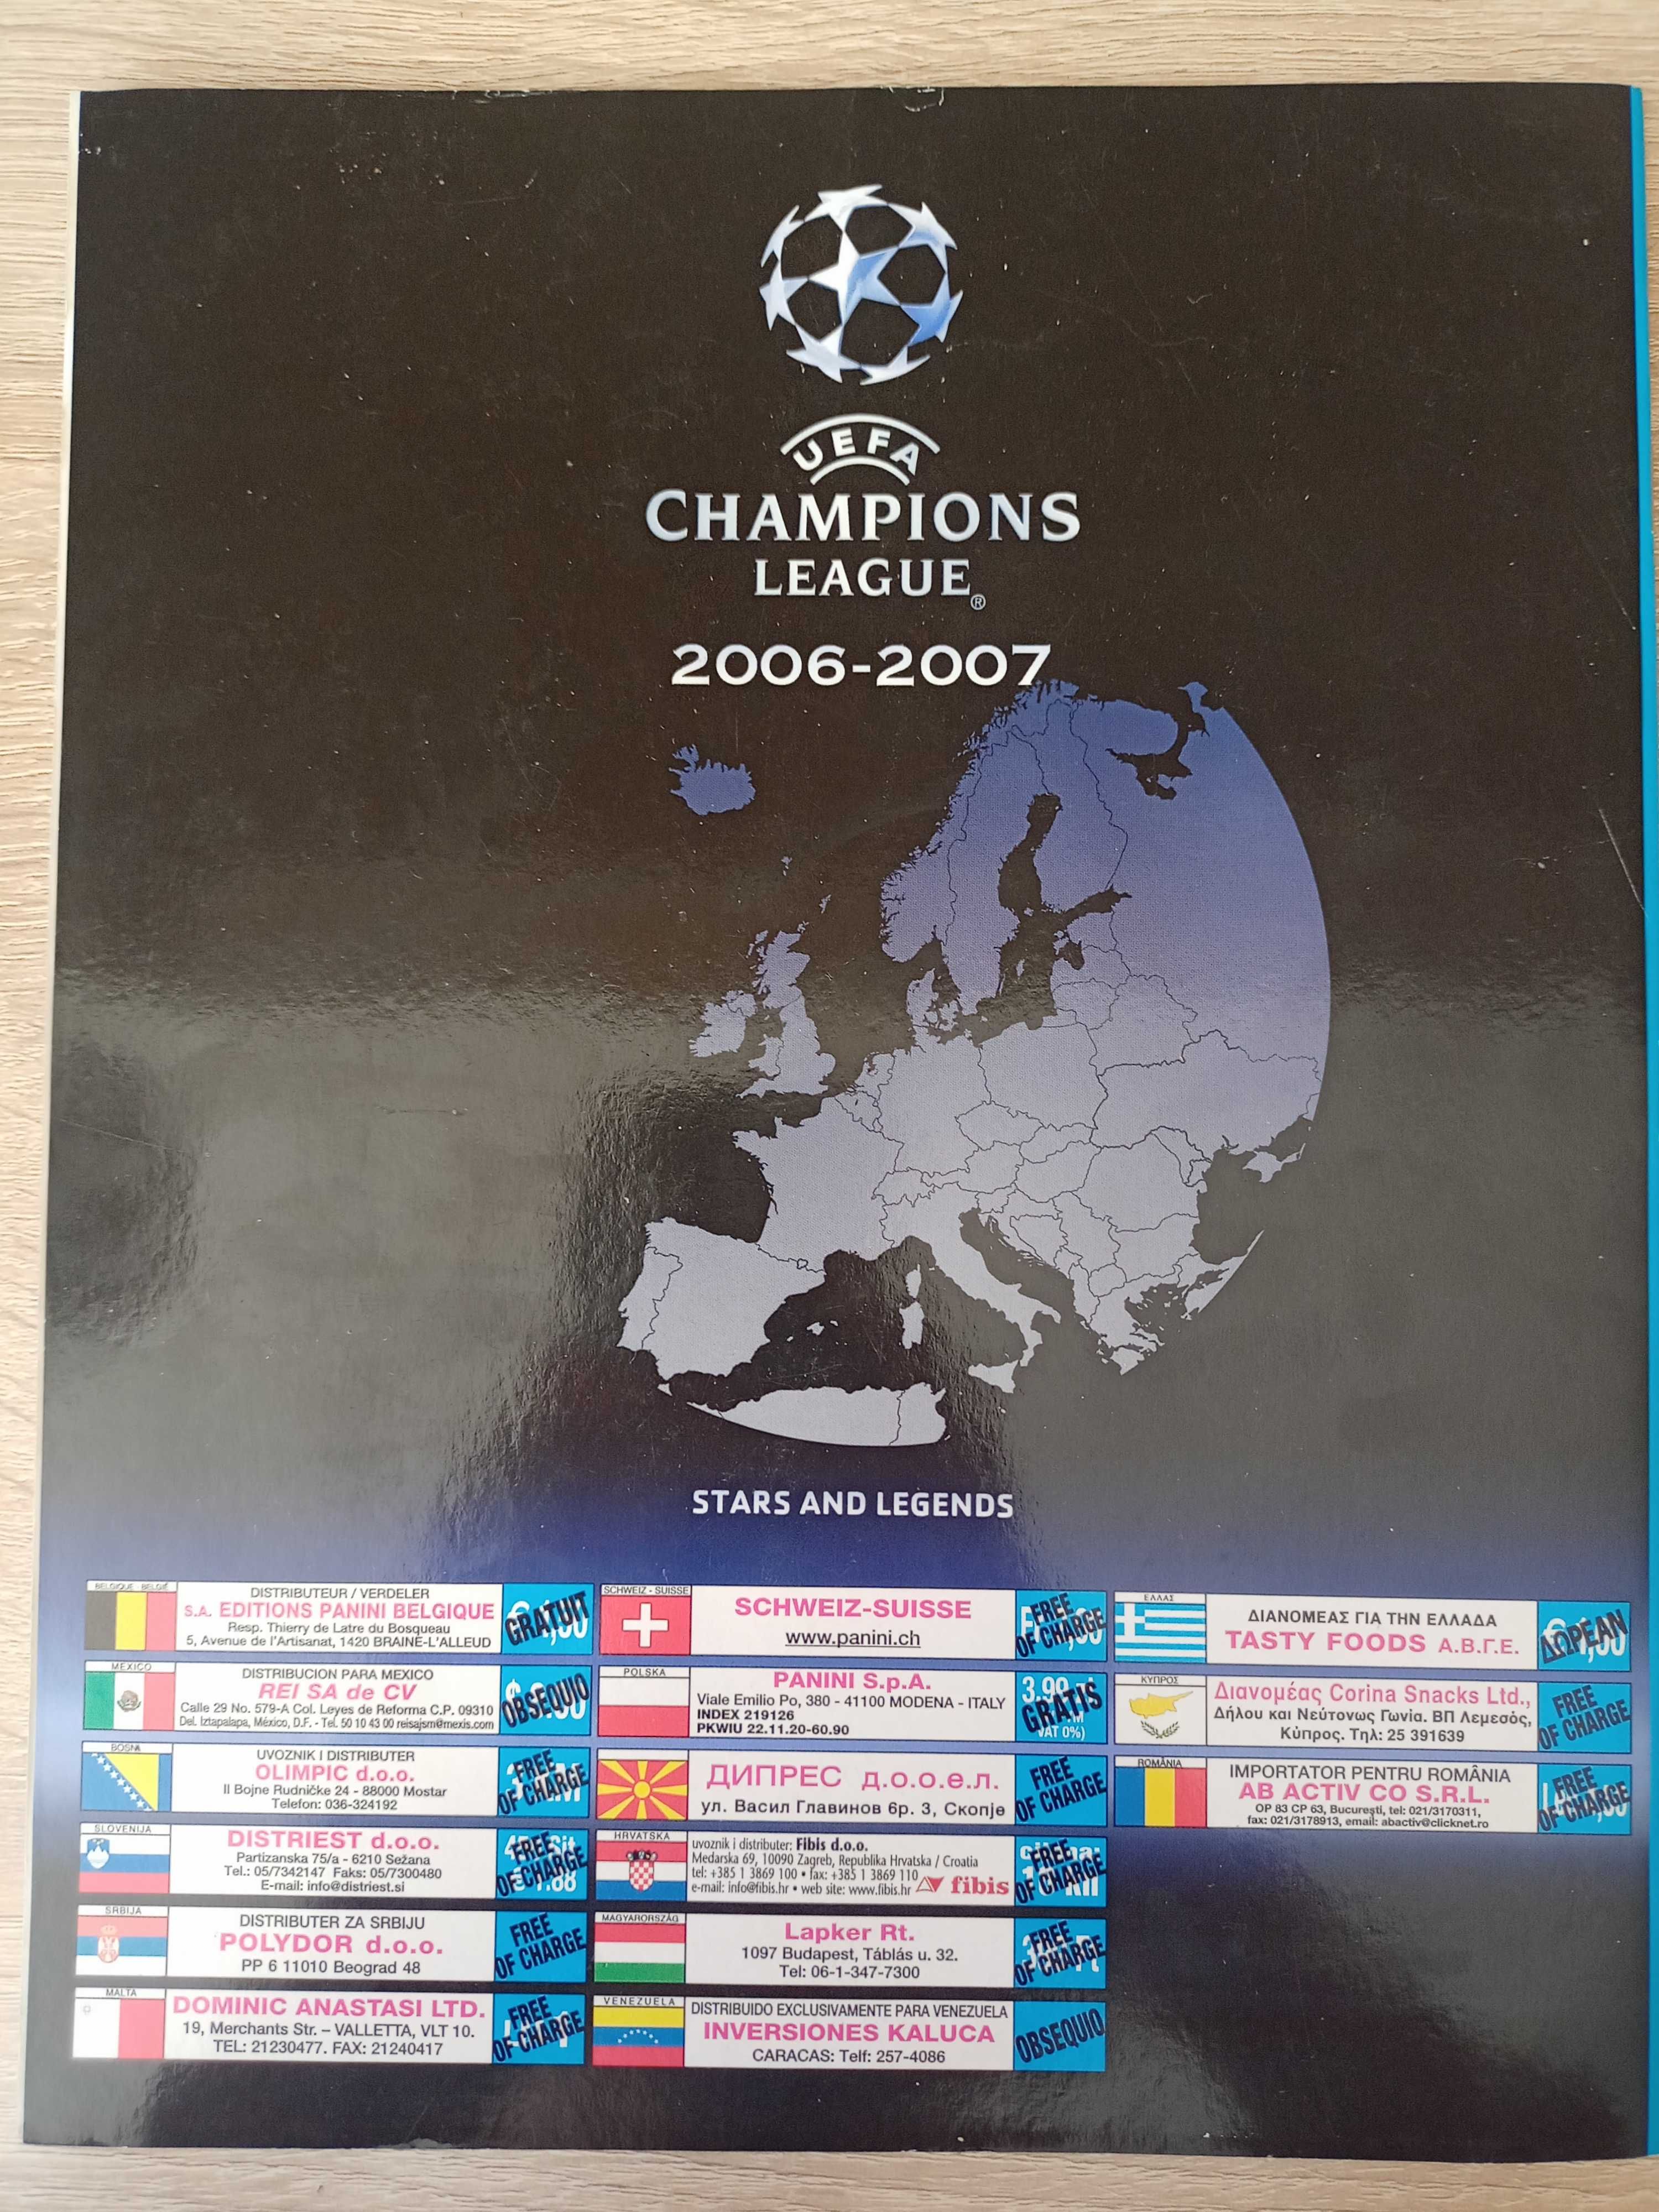 Panini Champions League 2006-07 pusty album na naklejki